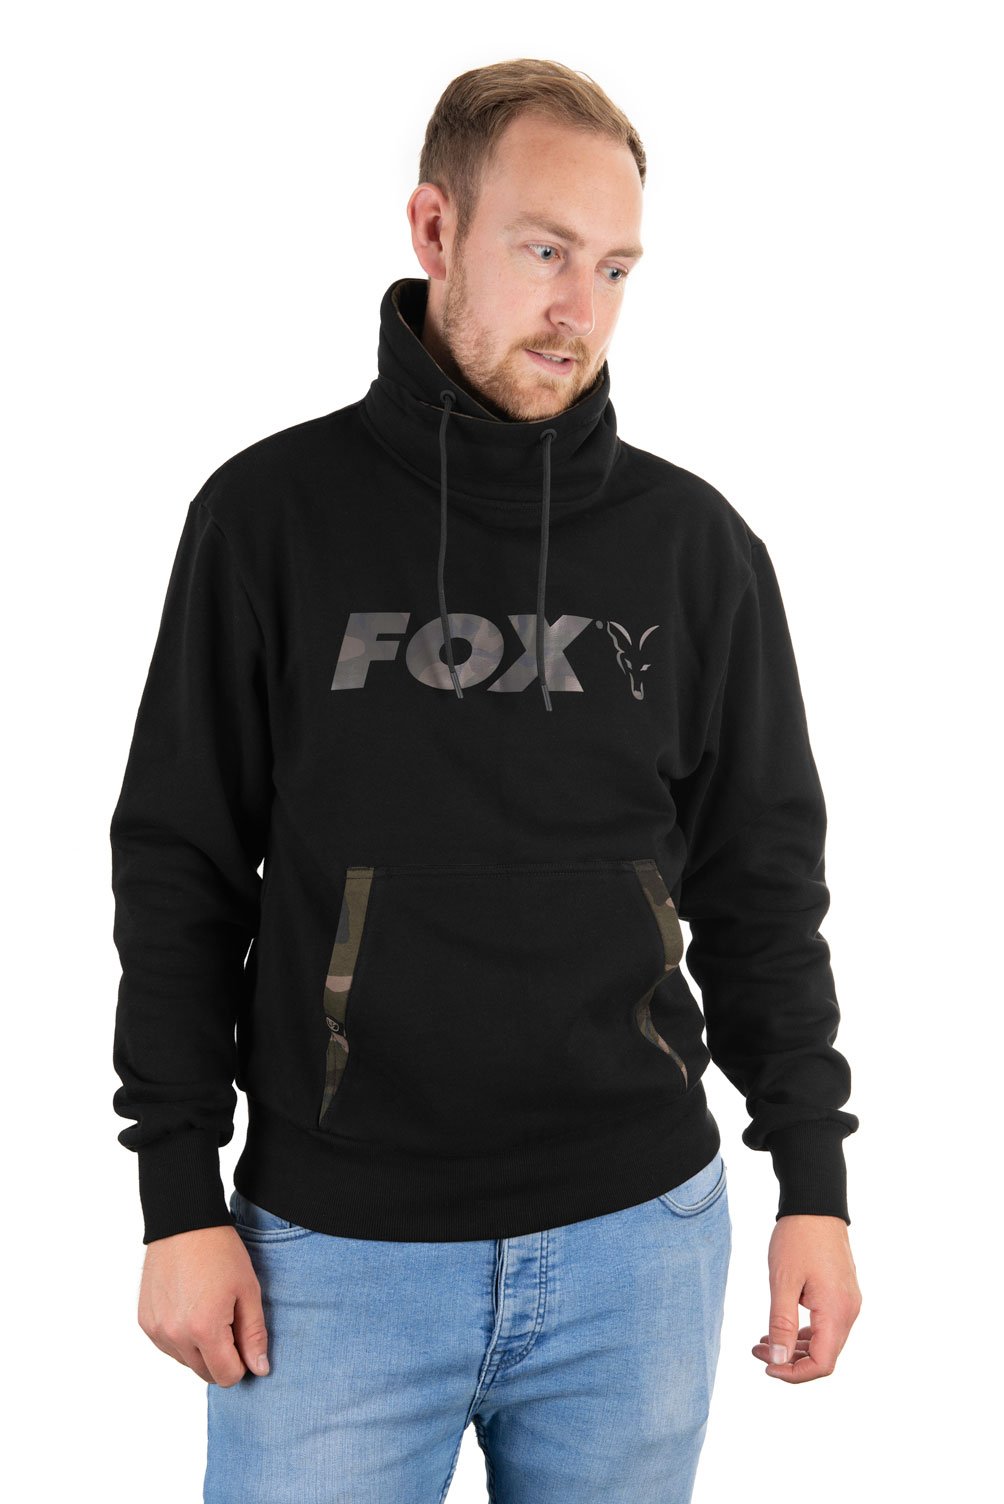 Fox Black/Camo High Neck Clothing